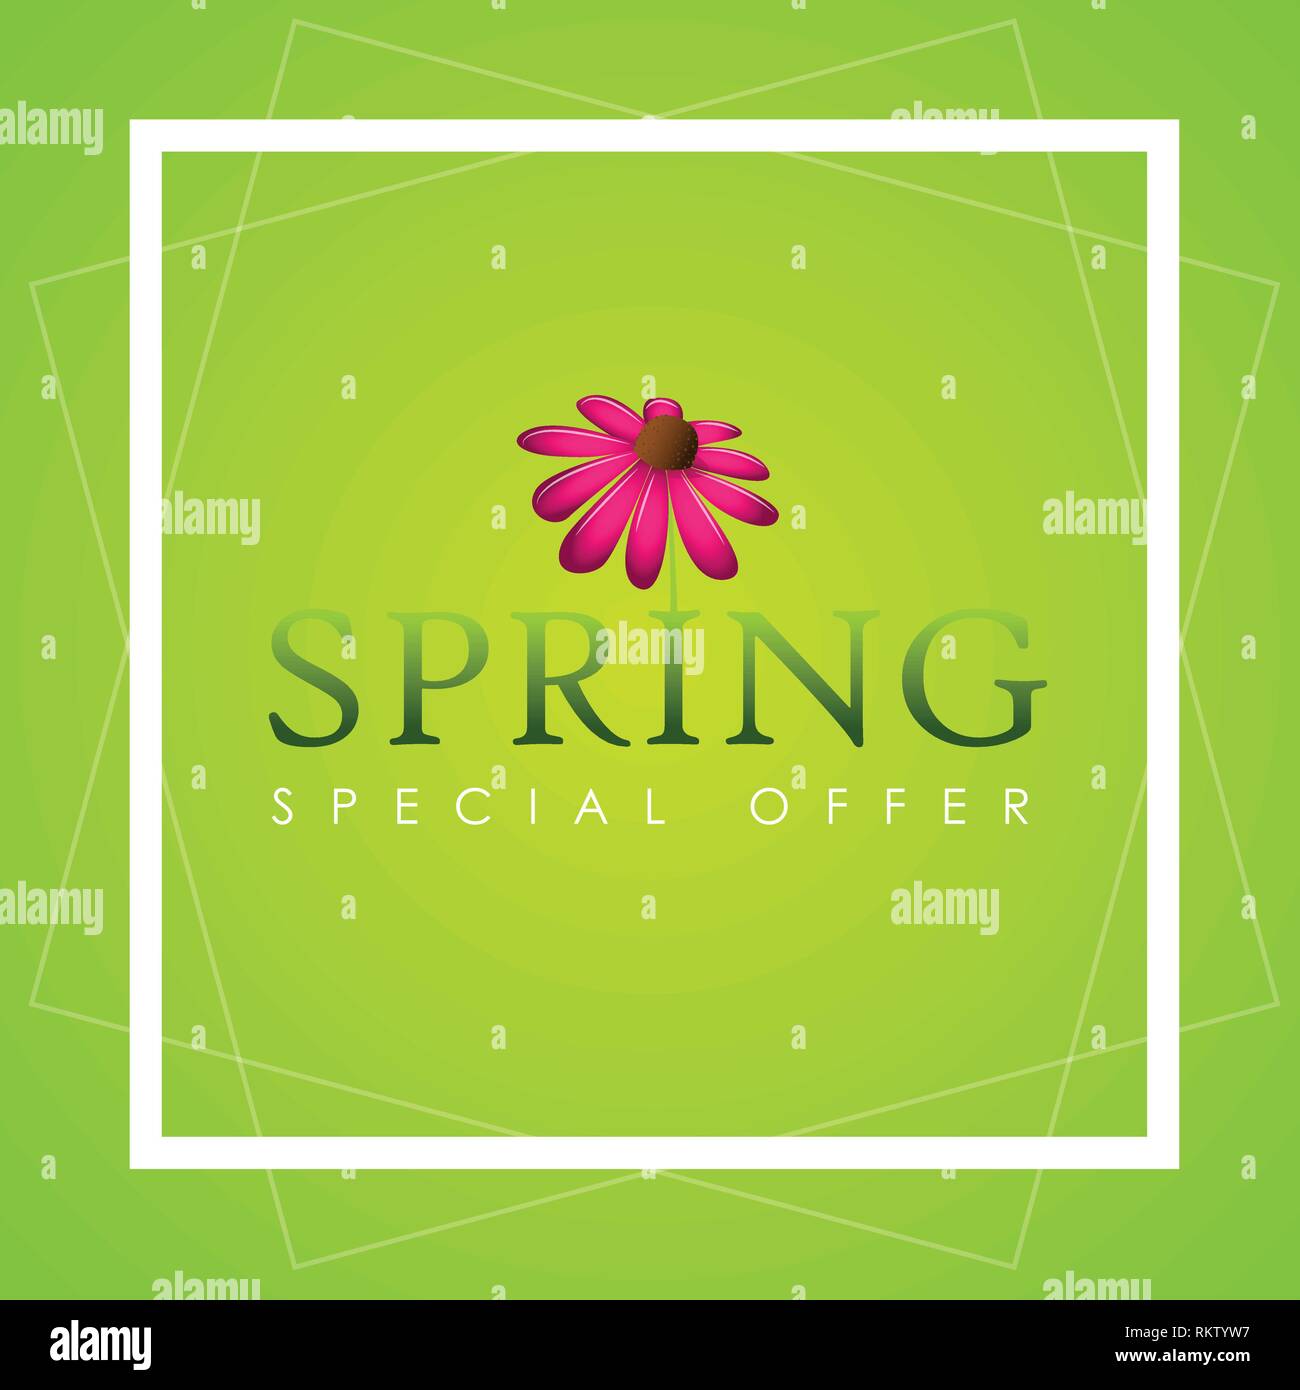 Feder Typografie mit rosa blühende Blume Blütenblatt auf grünem Hintergrund Vektor-illustration EPS 10. Stock Vektor